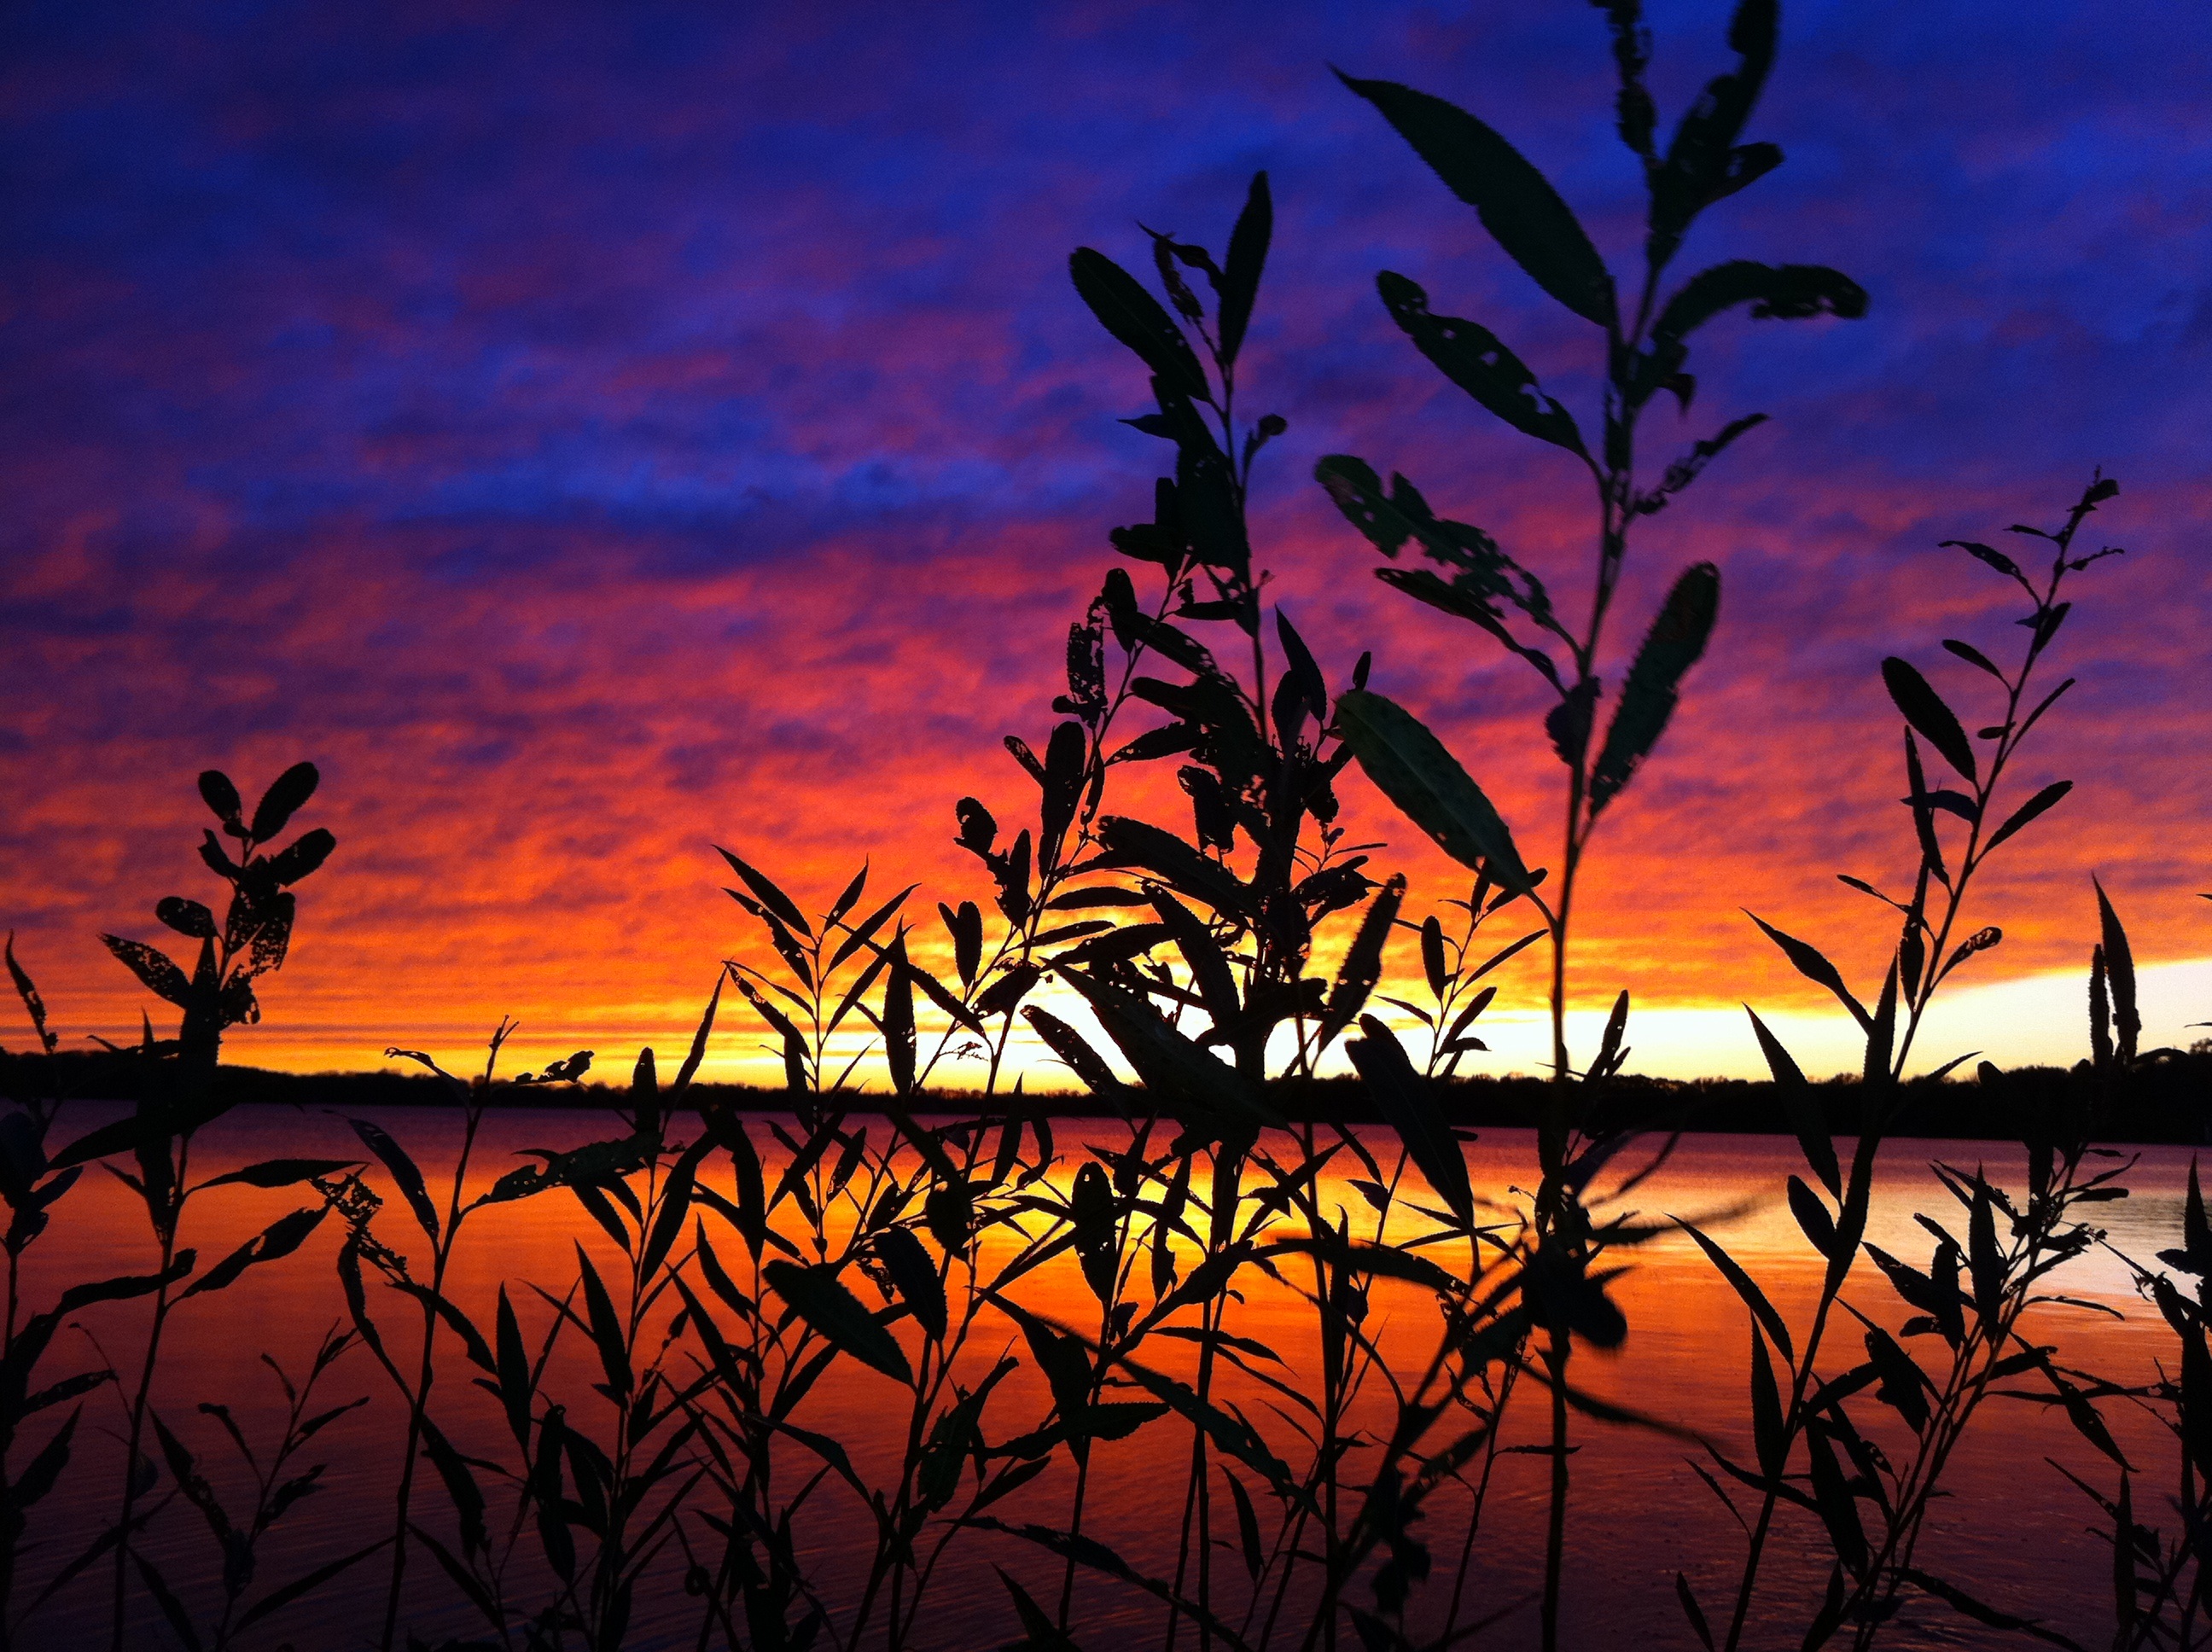 Sunset Wisconsin Powers Lake free image download